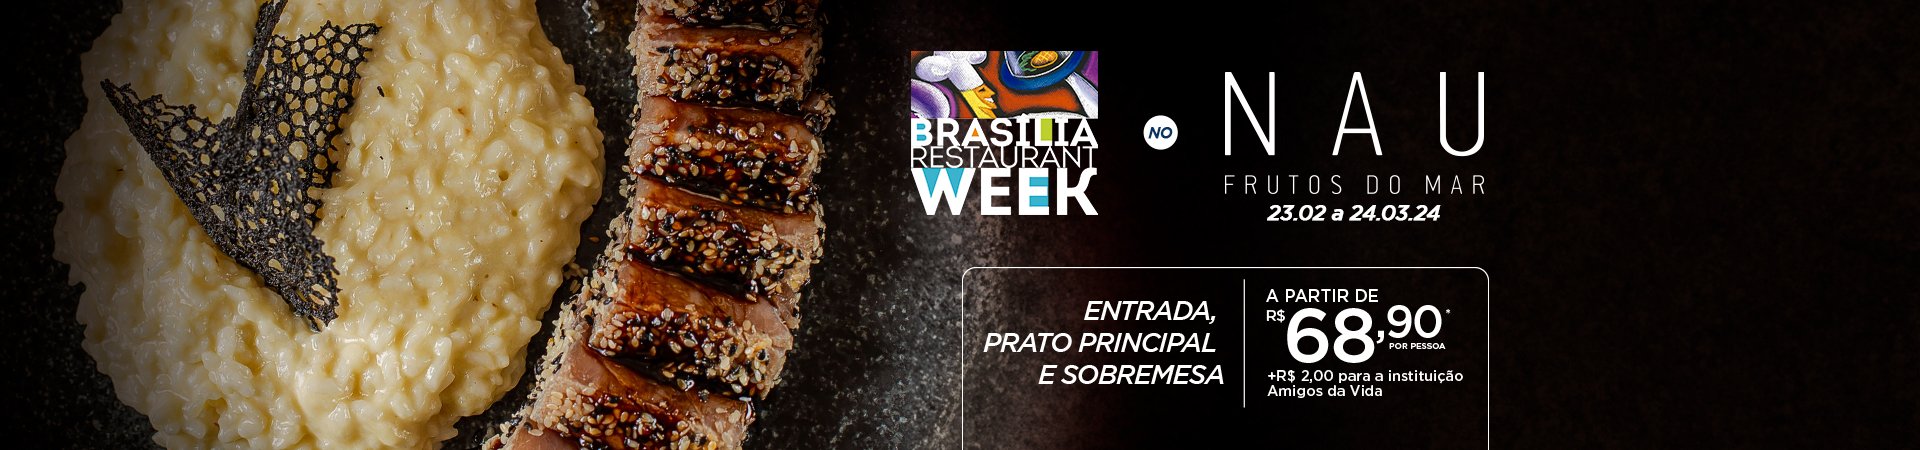 Restaurant Week Brasília